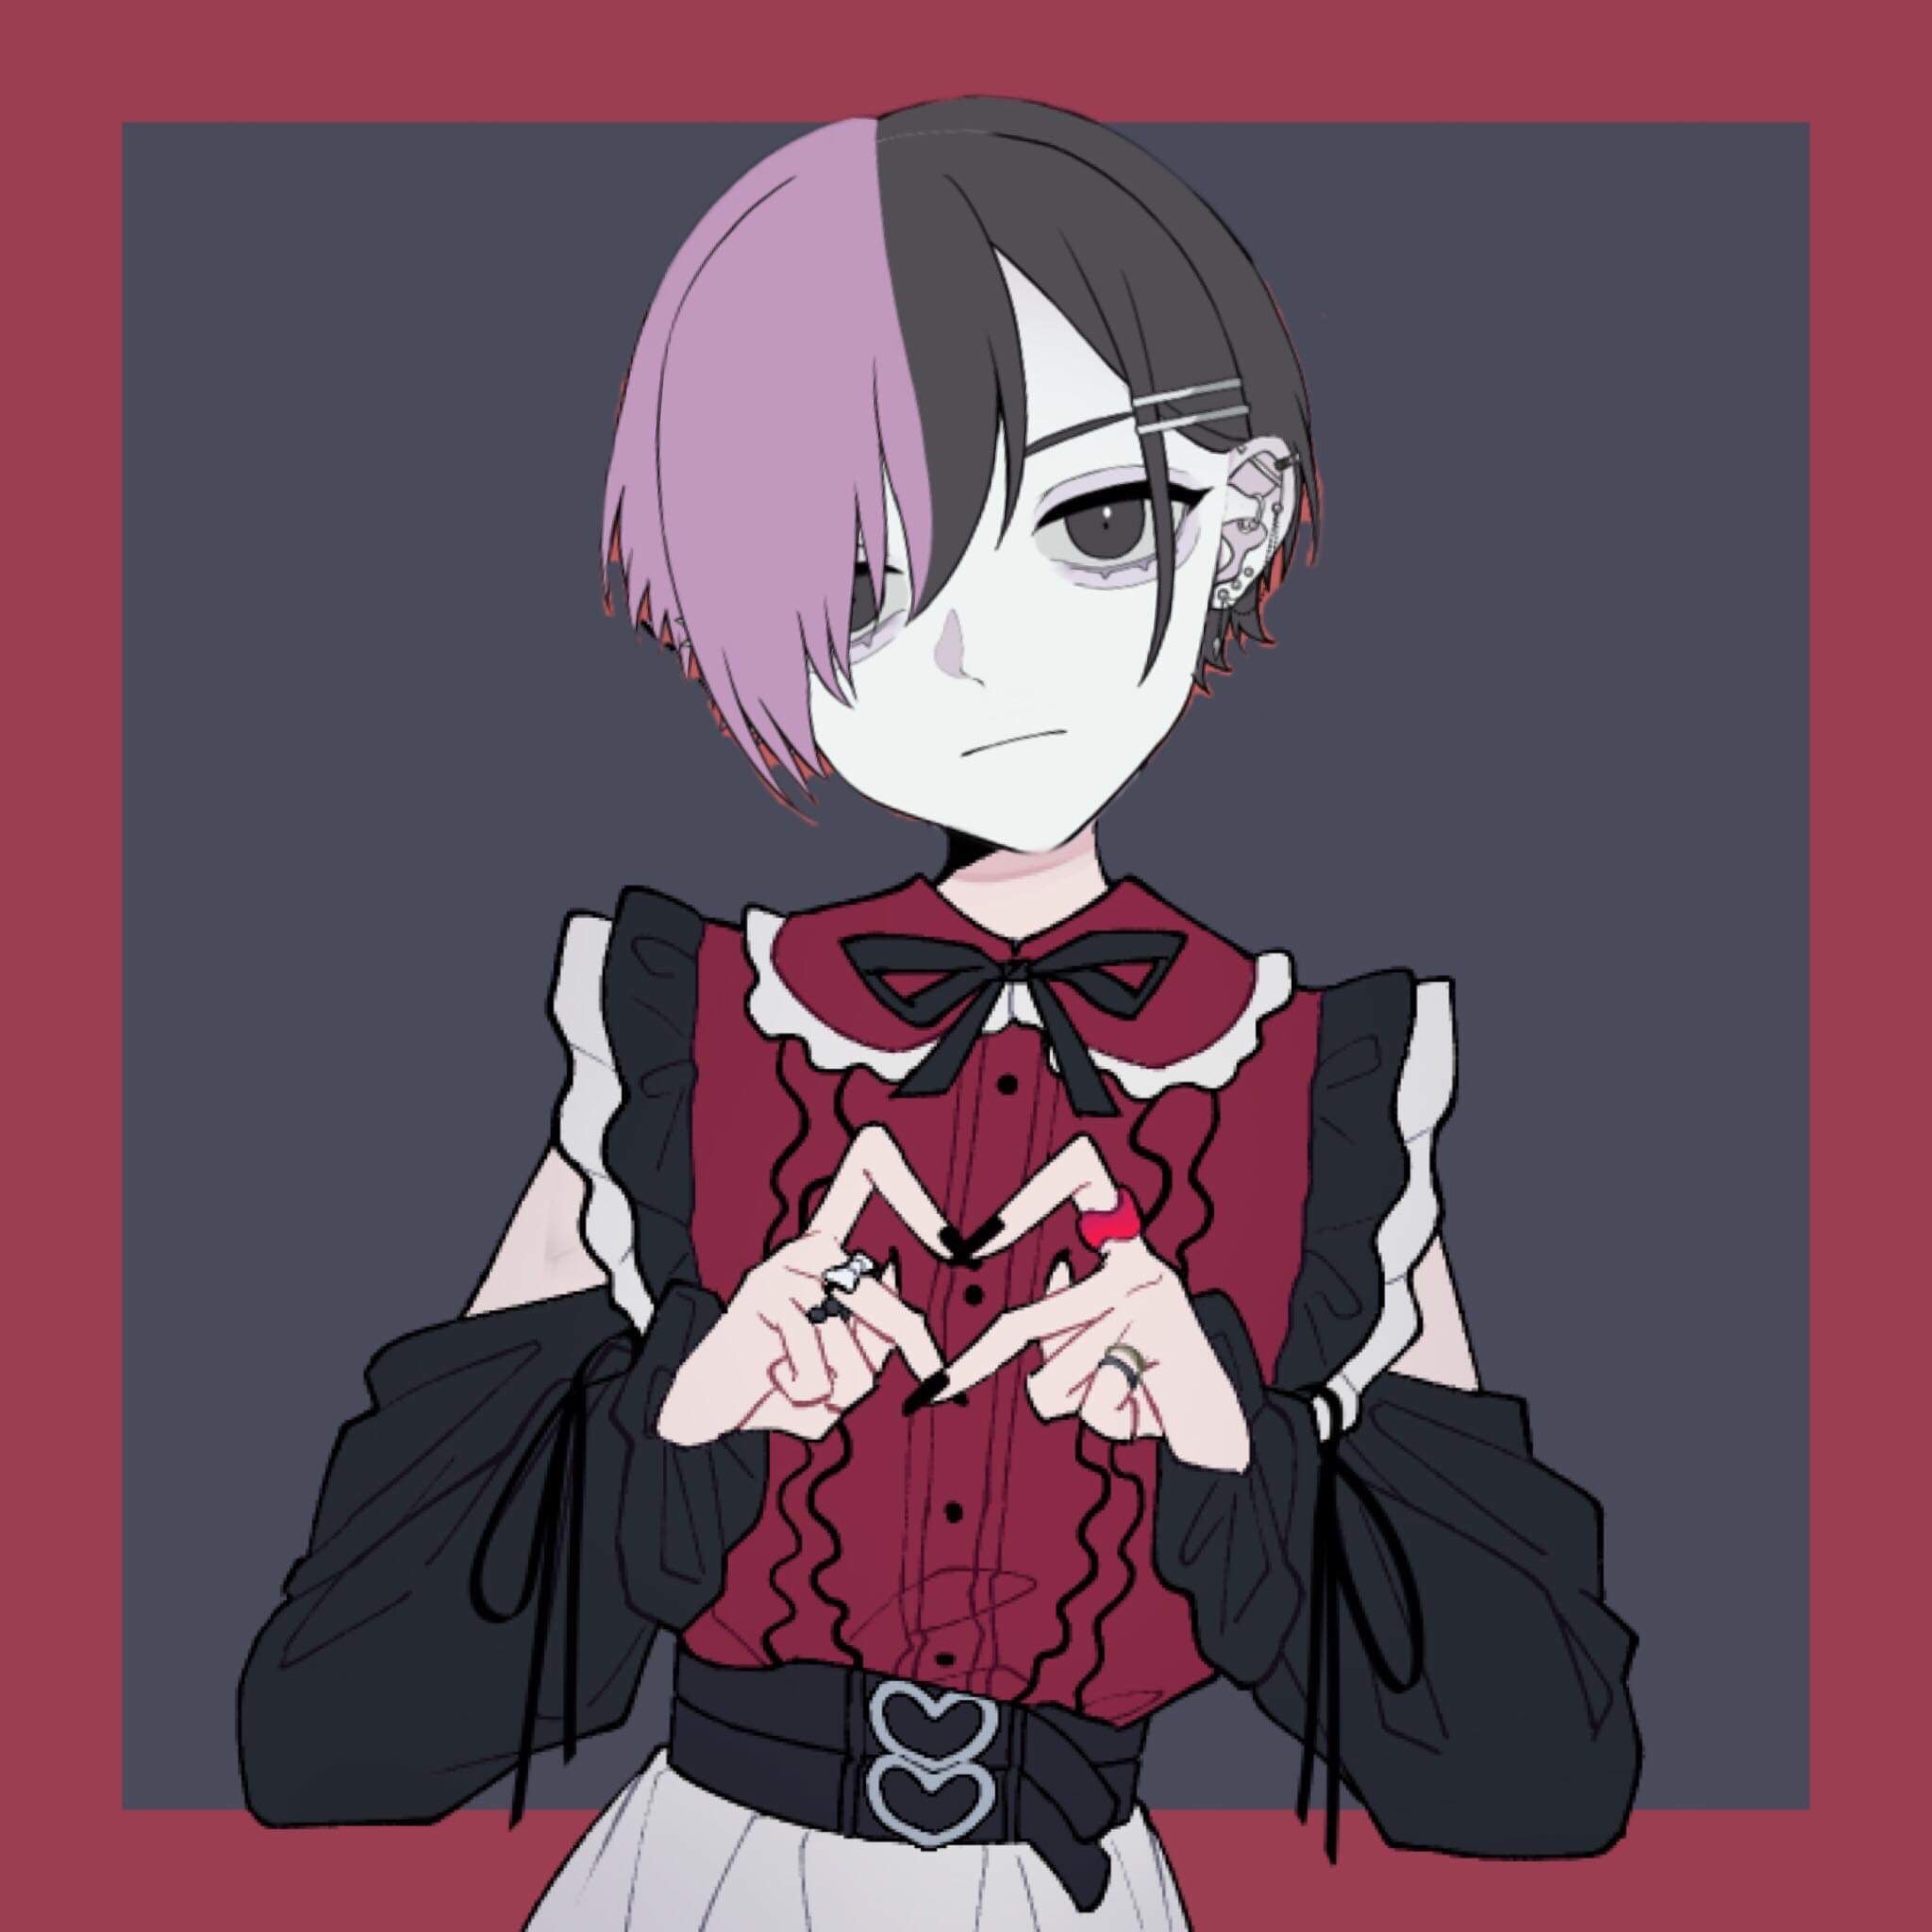 Character sheet of Shu Kurenai with the outfit he wears in